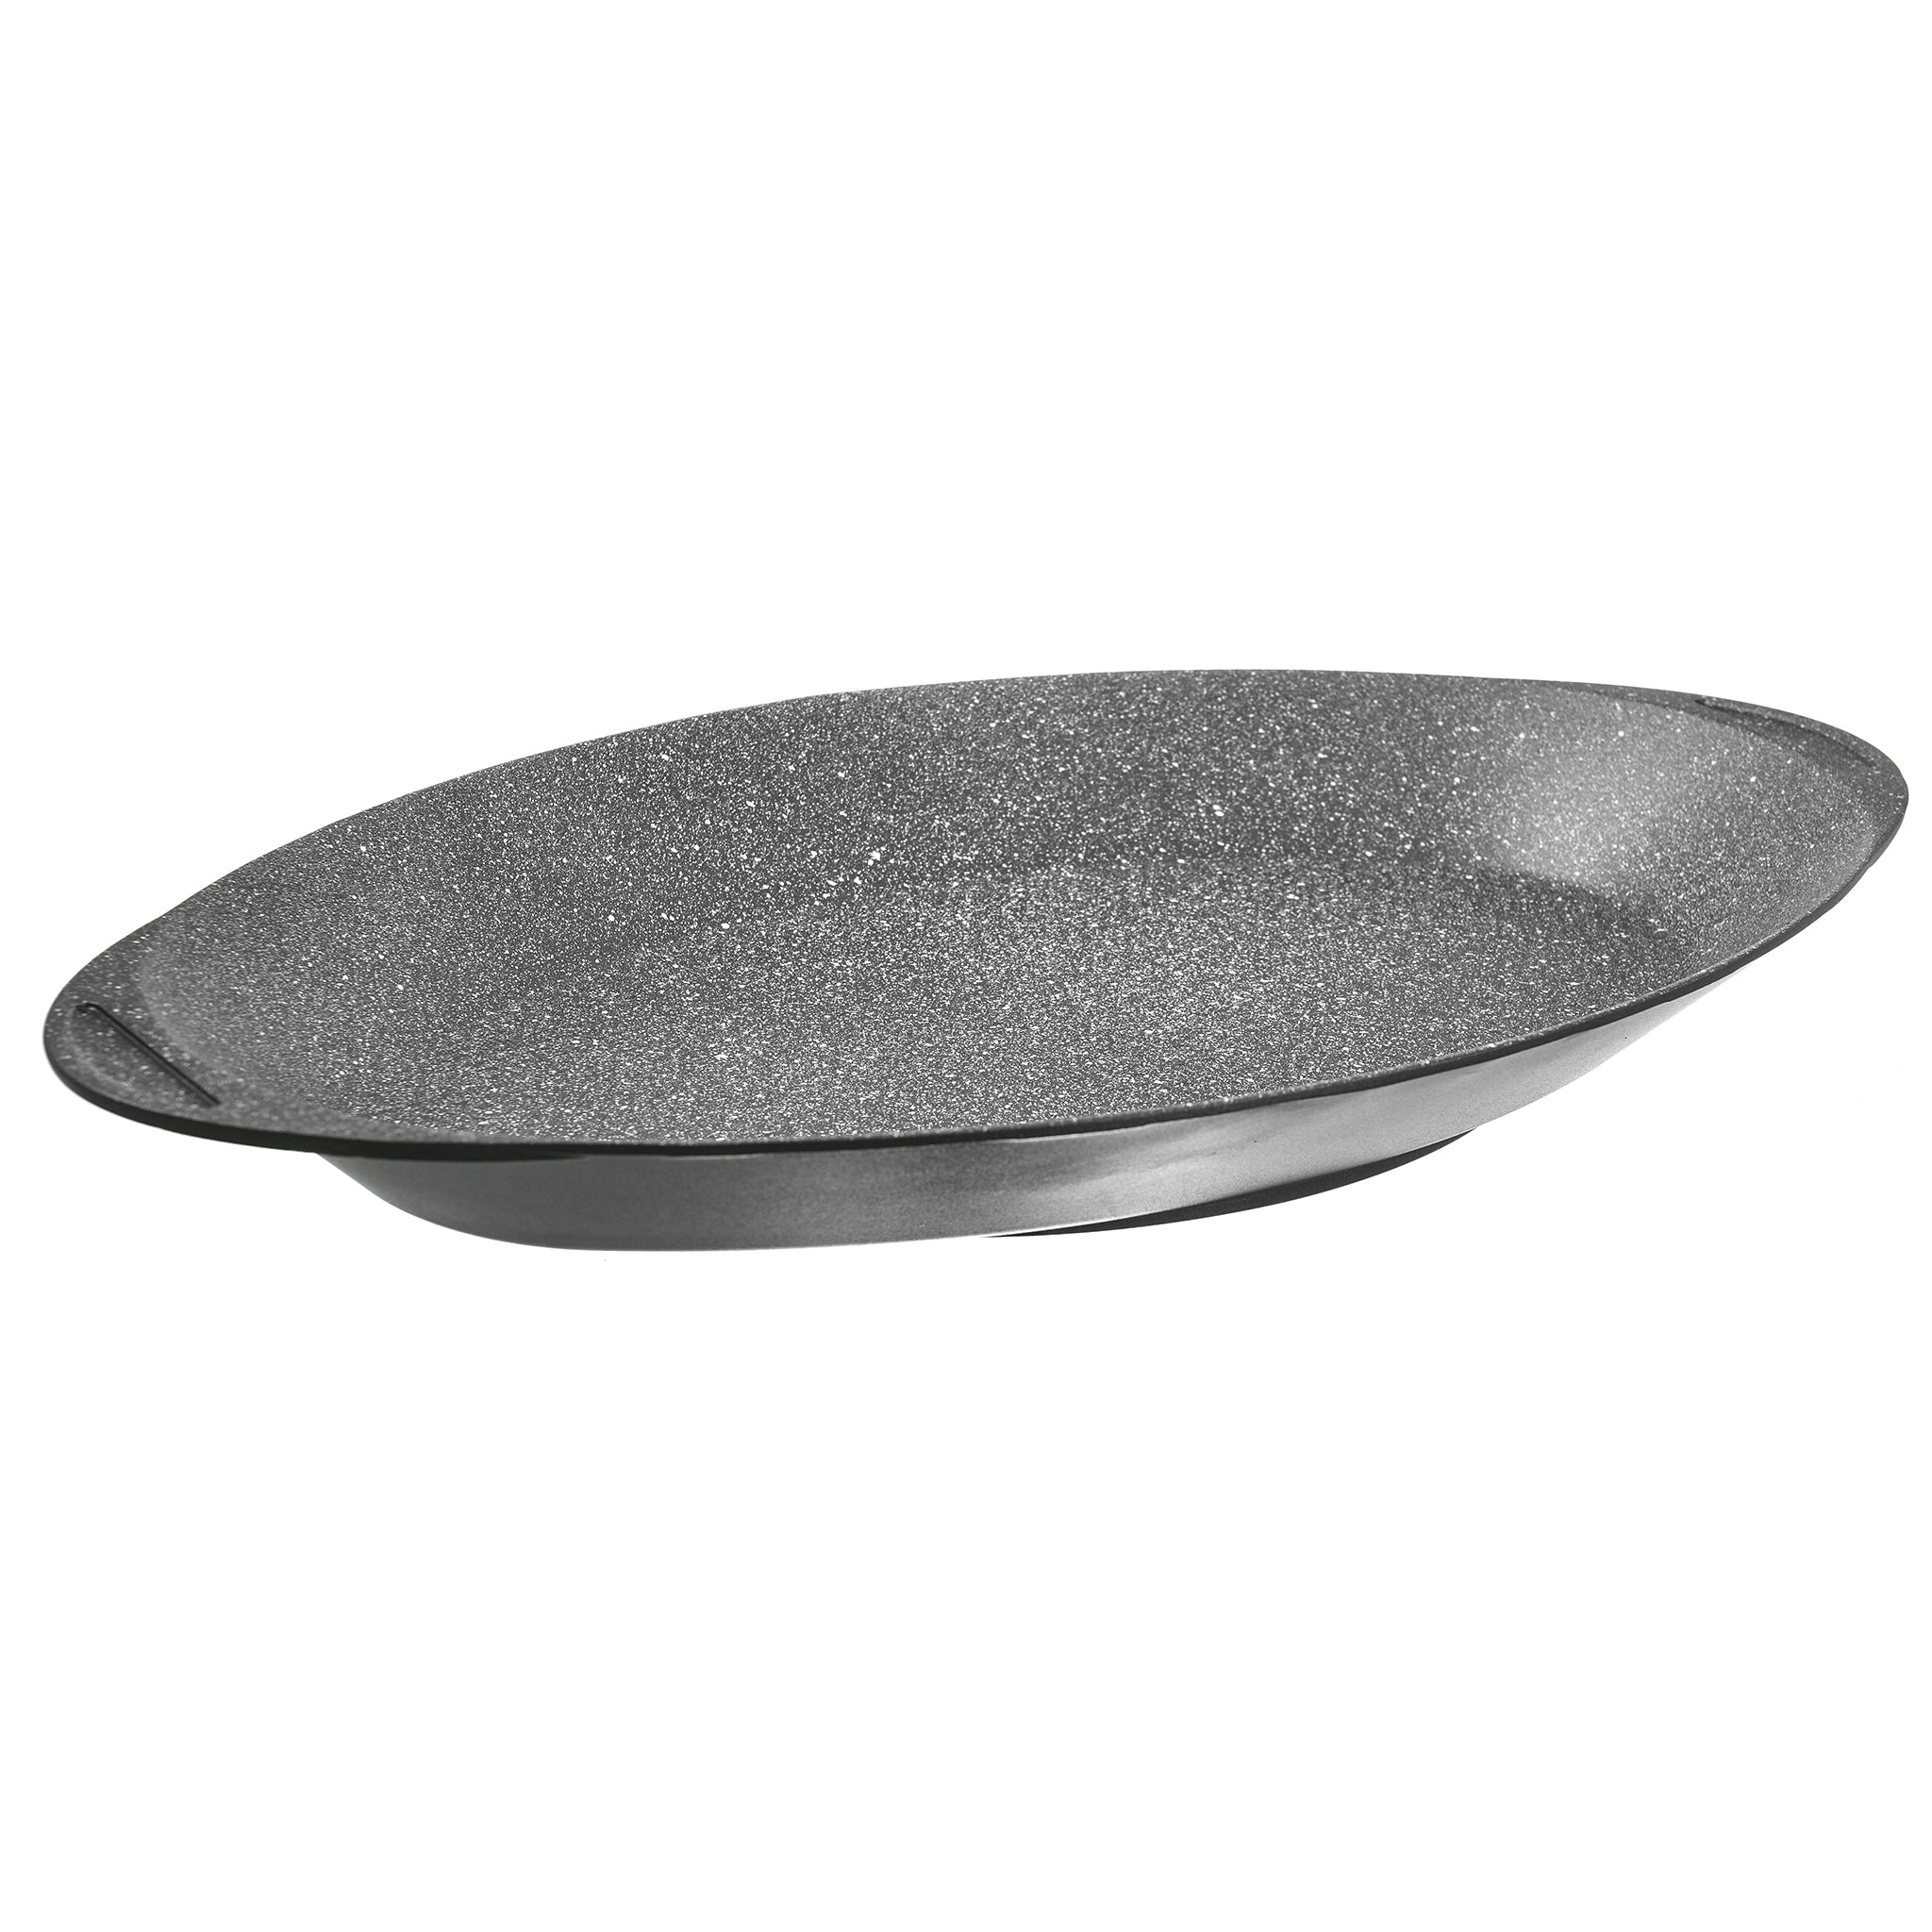 Risoli - Oval Fishpan - Black- Die Cast Aluminum - 42cm - 44000422